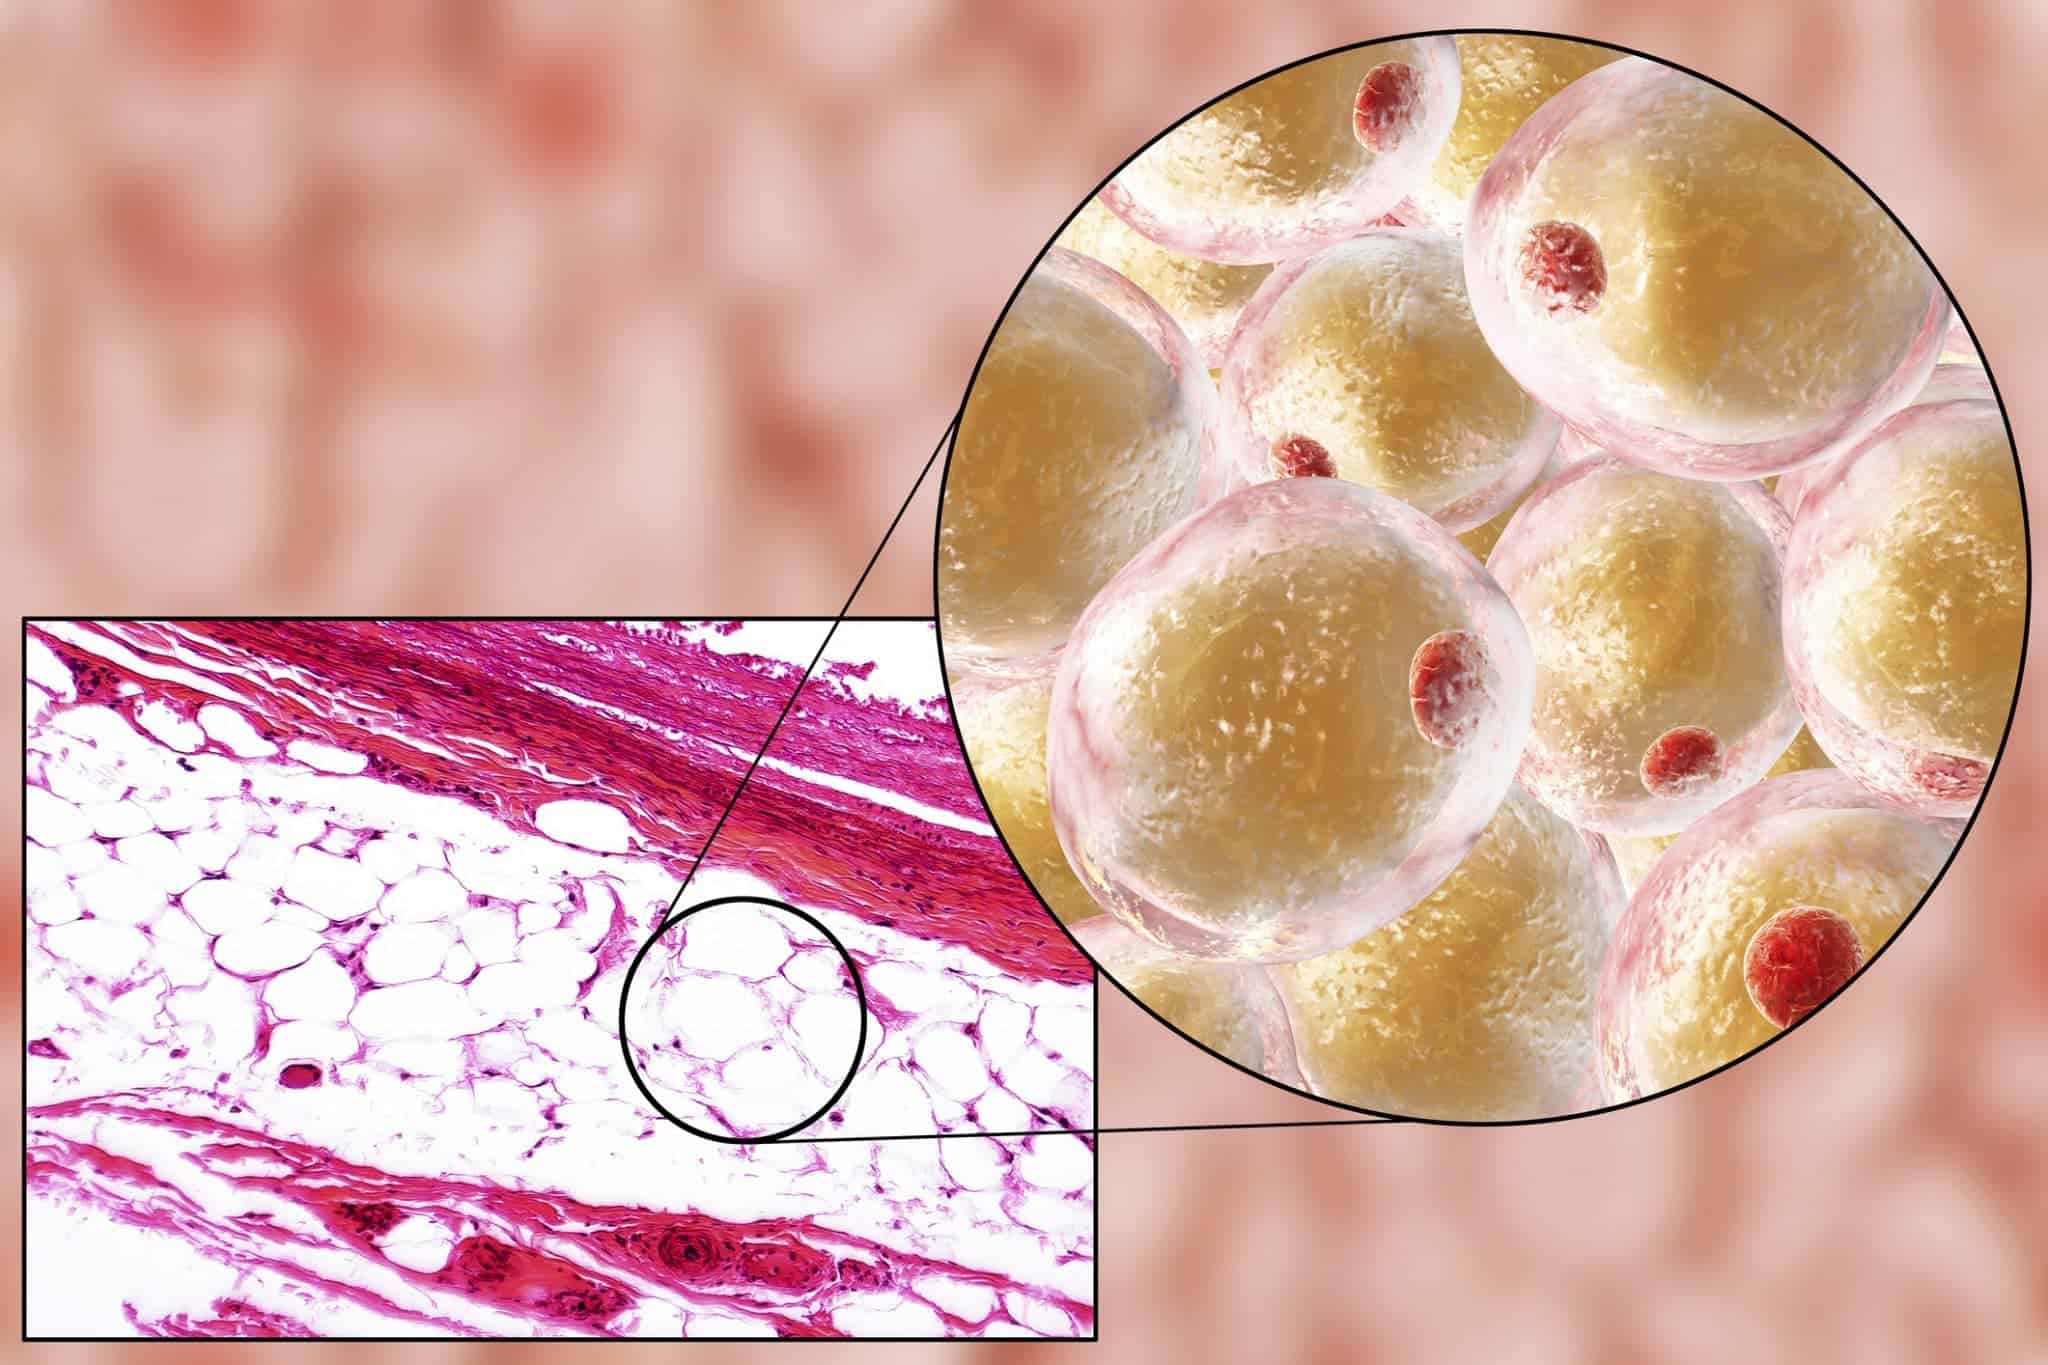 Adipose tissue, fat cells